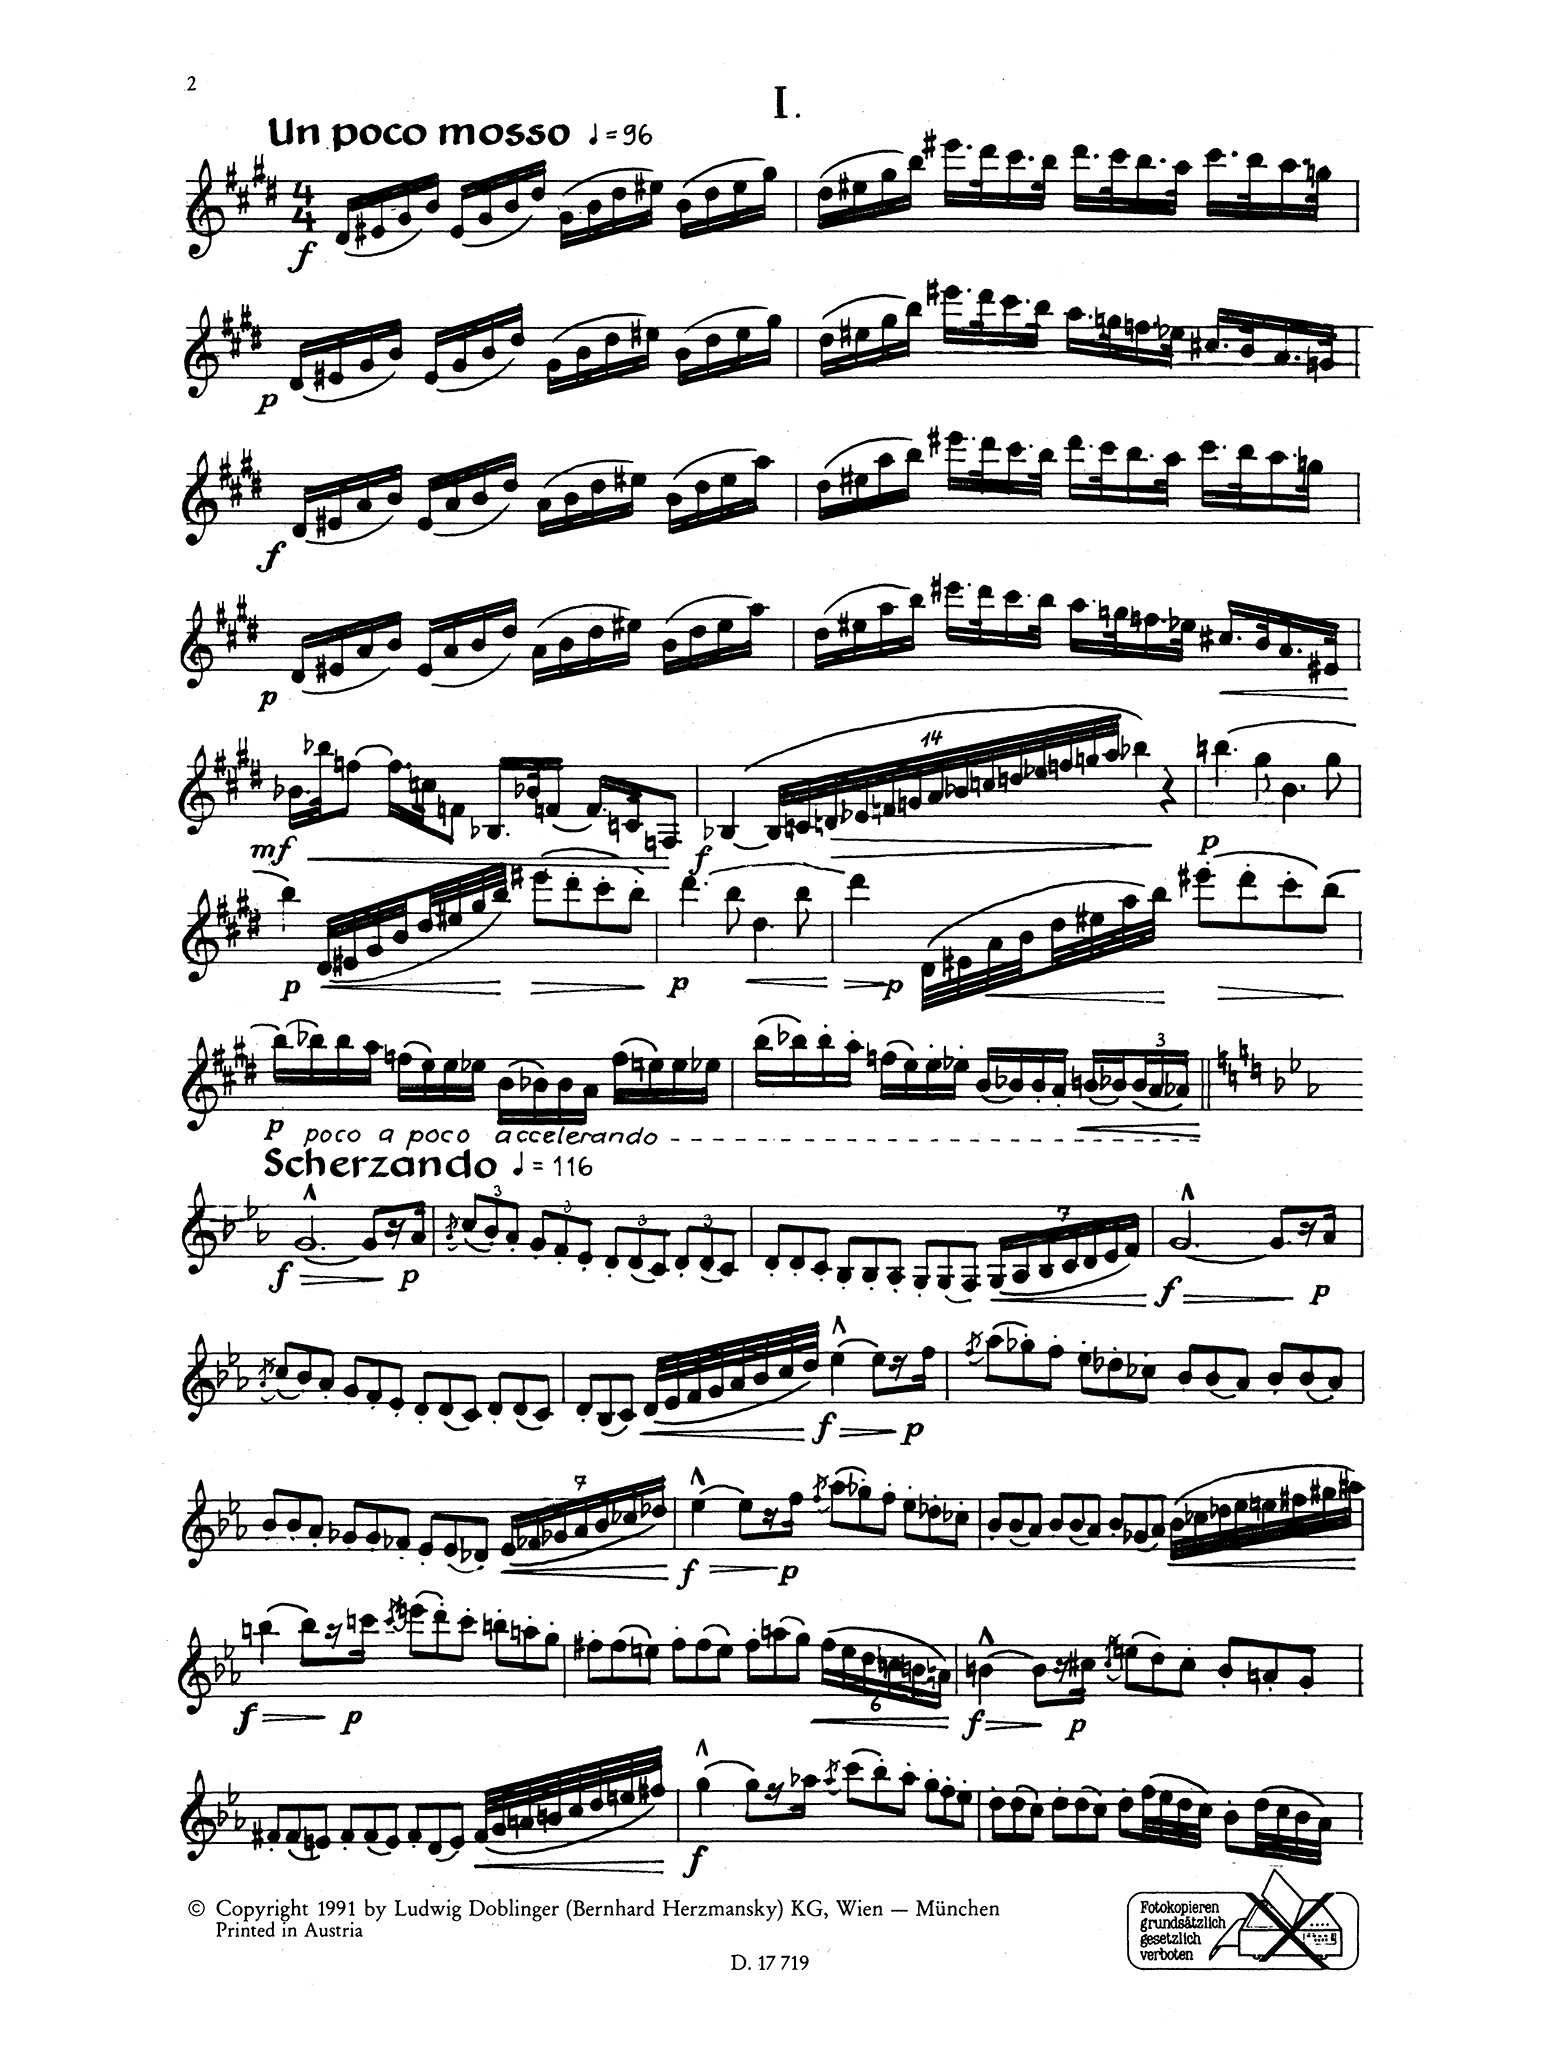 Kubizek 5 Studies on Claude Debussy’s Première rhapsodie clarinet page 2